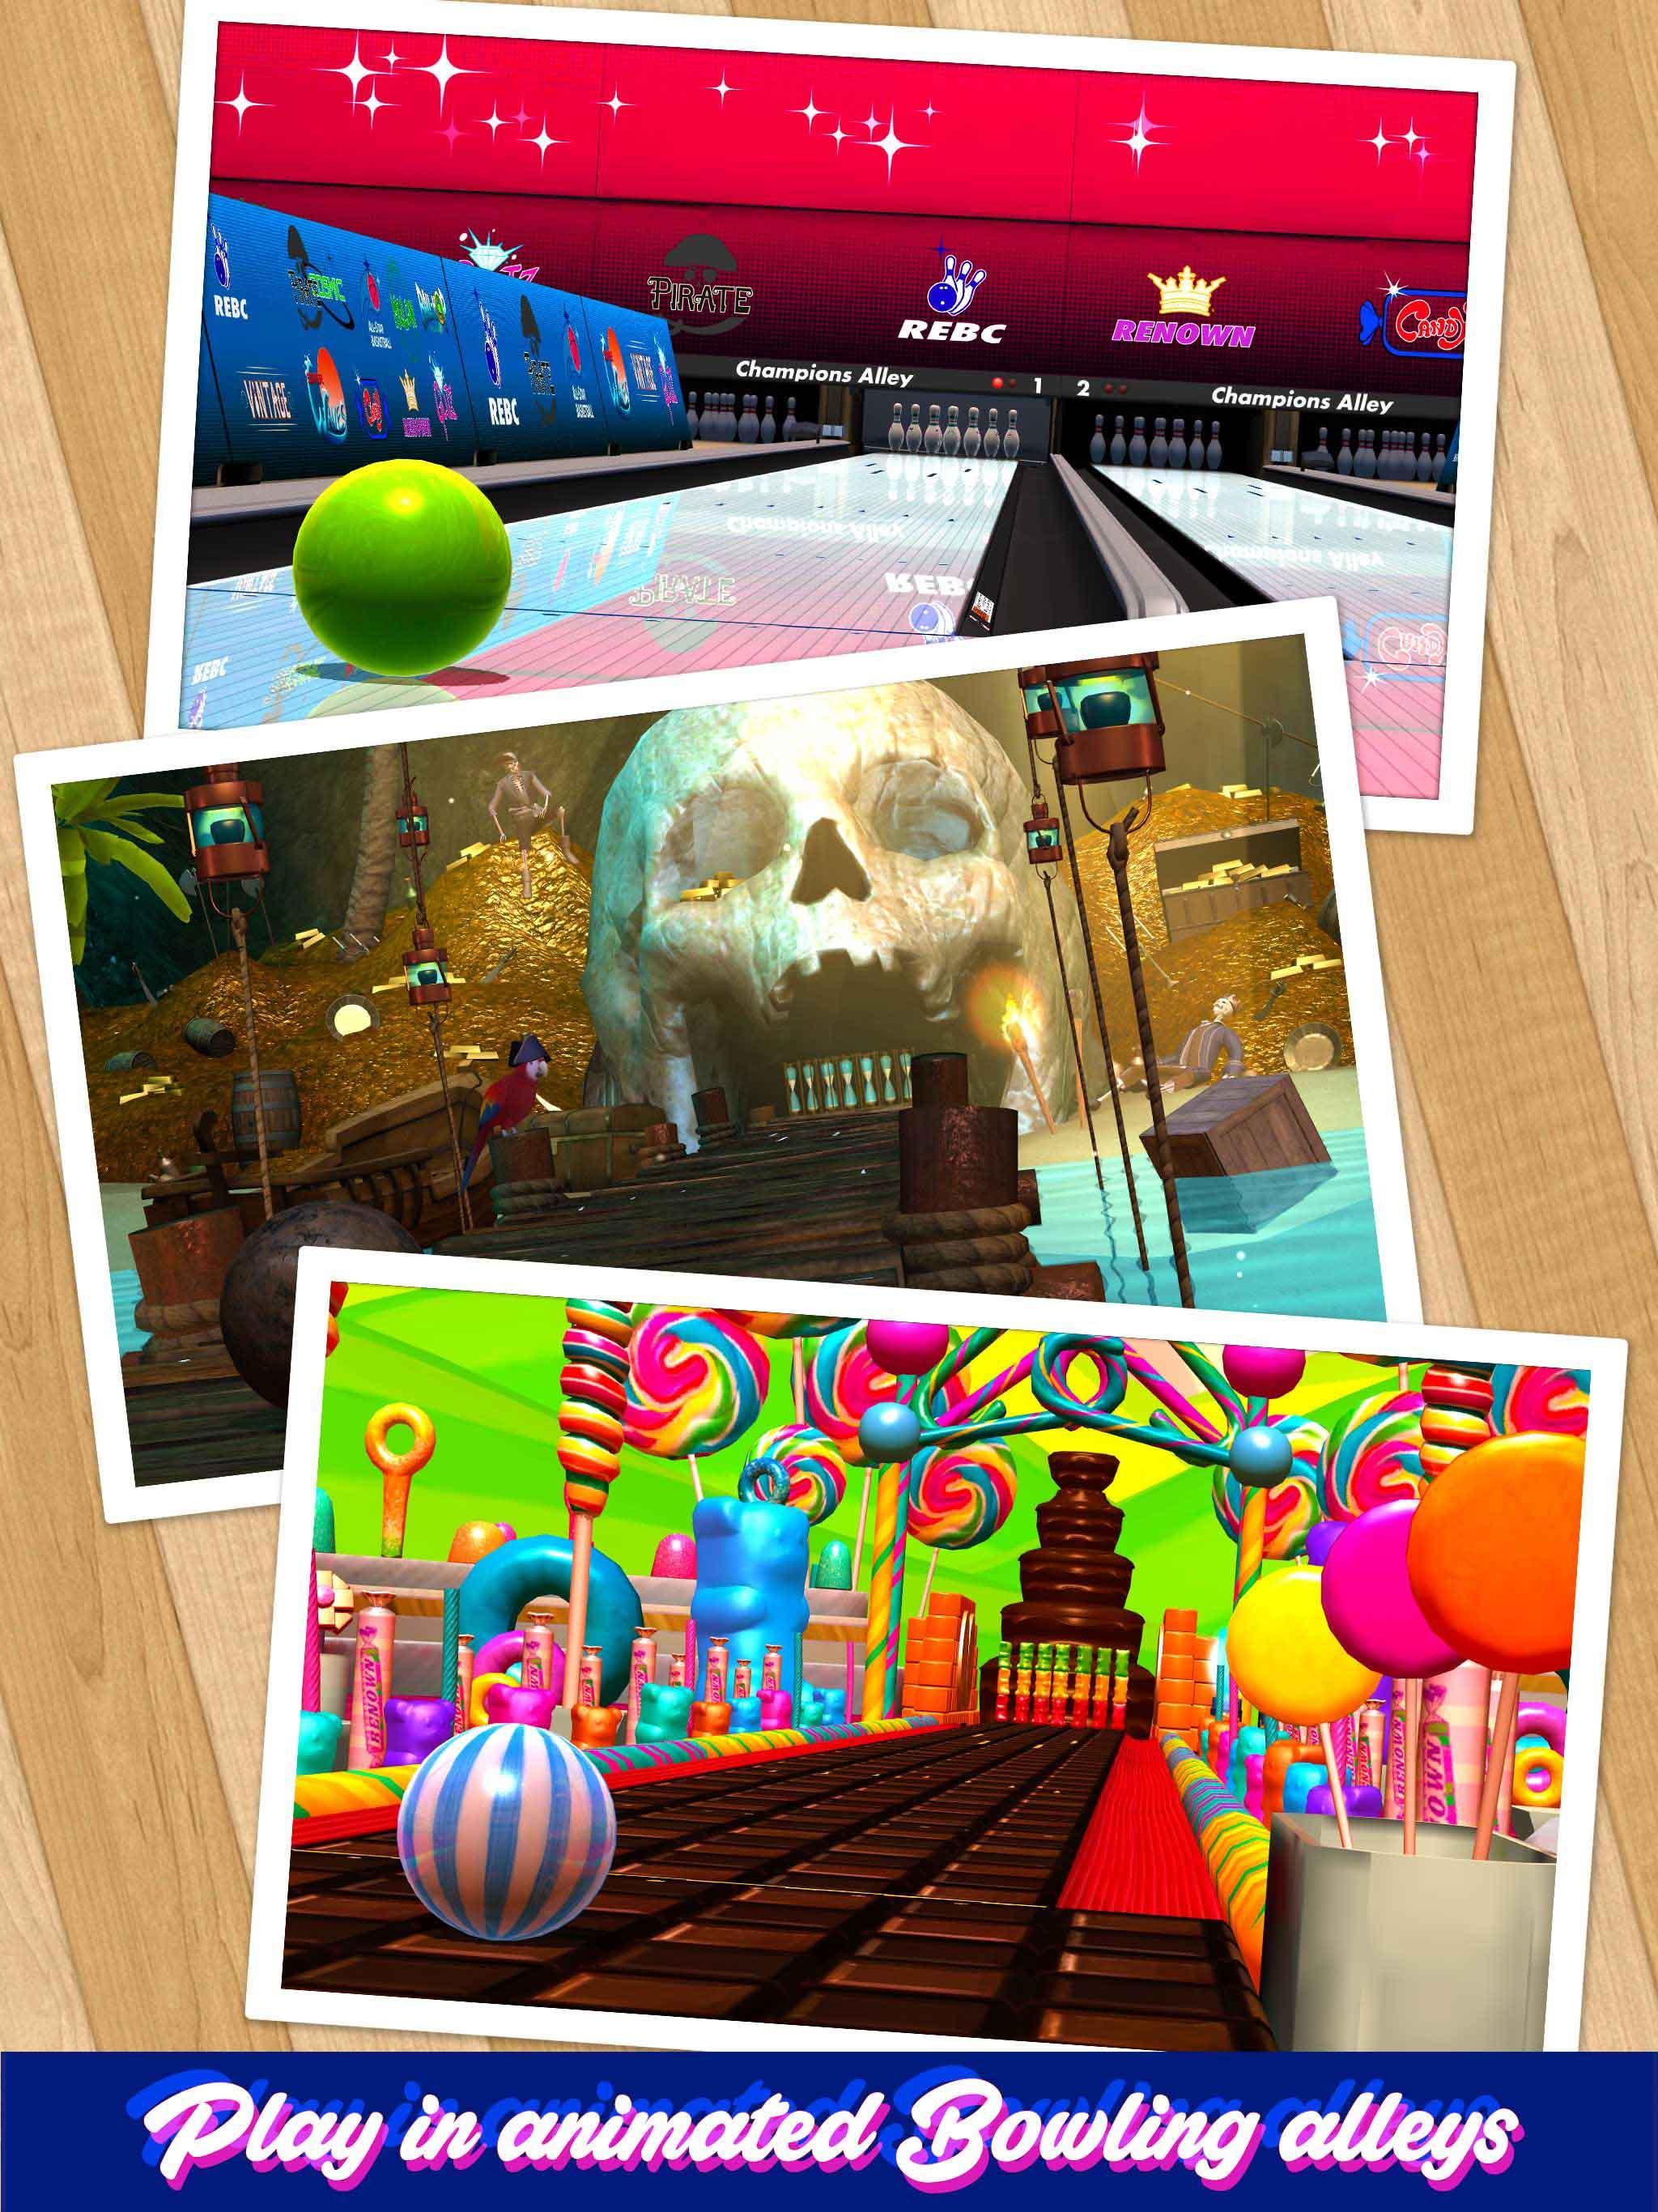 Bowling Go! - Best Realistic 10 Pin Bowling Games 0.3.0.1512 Screenshot 10